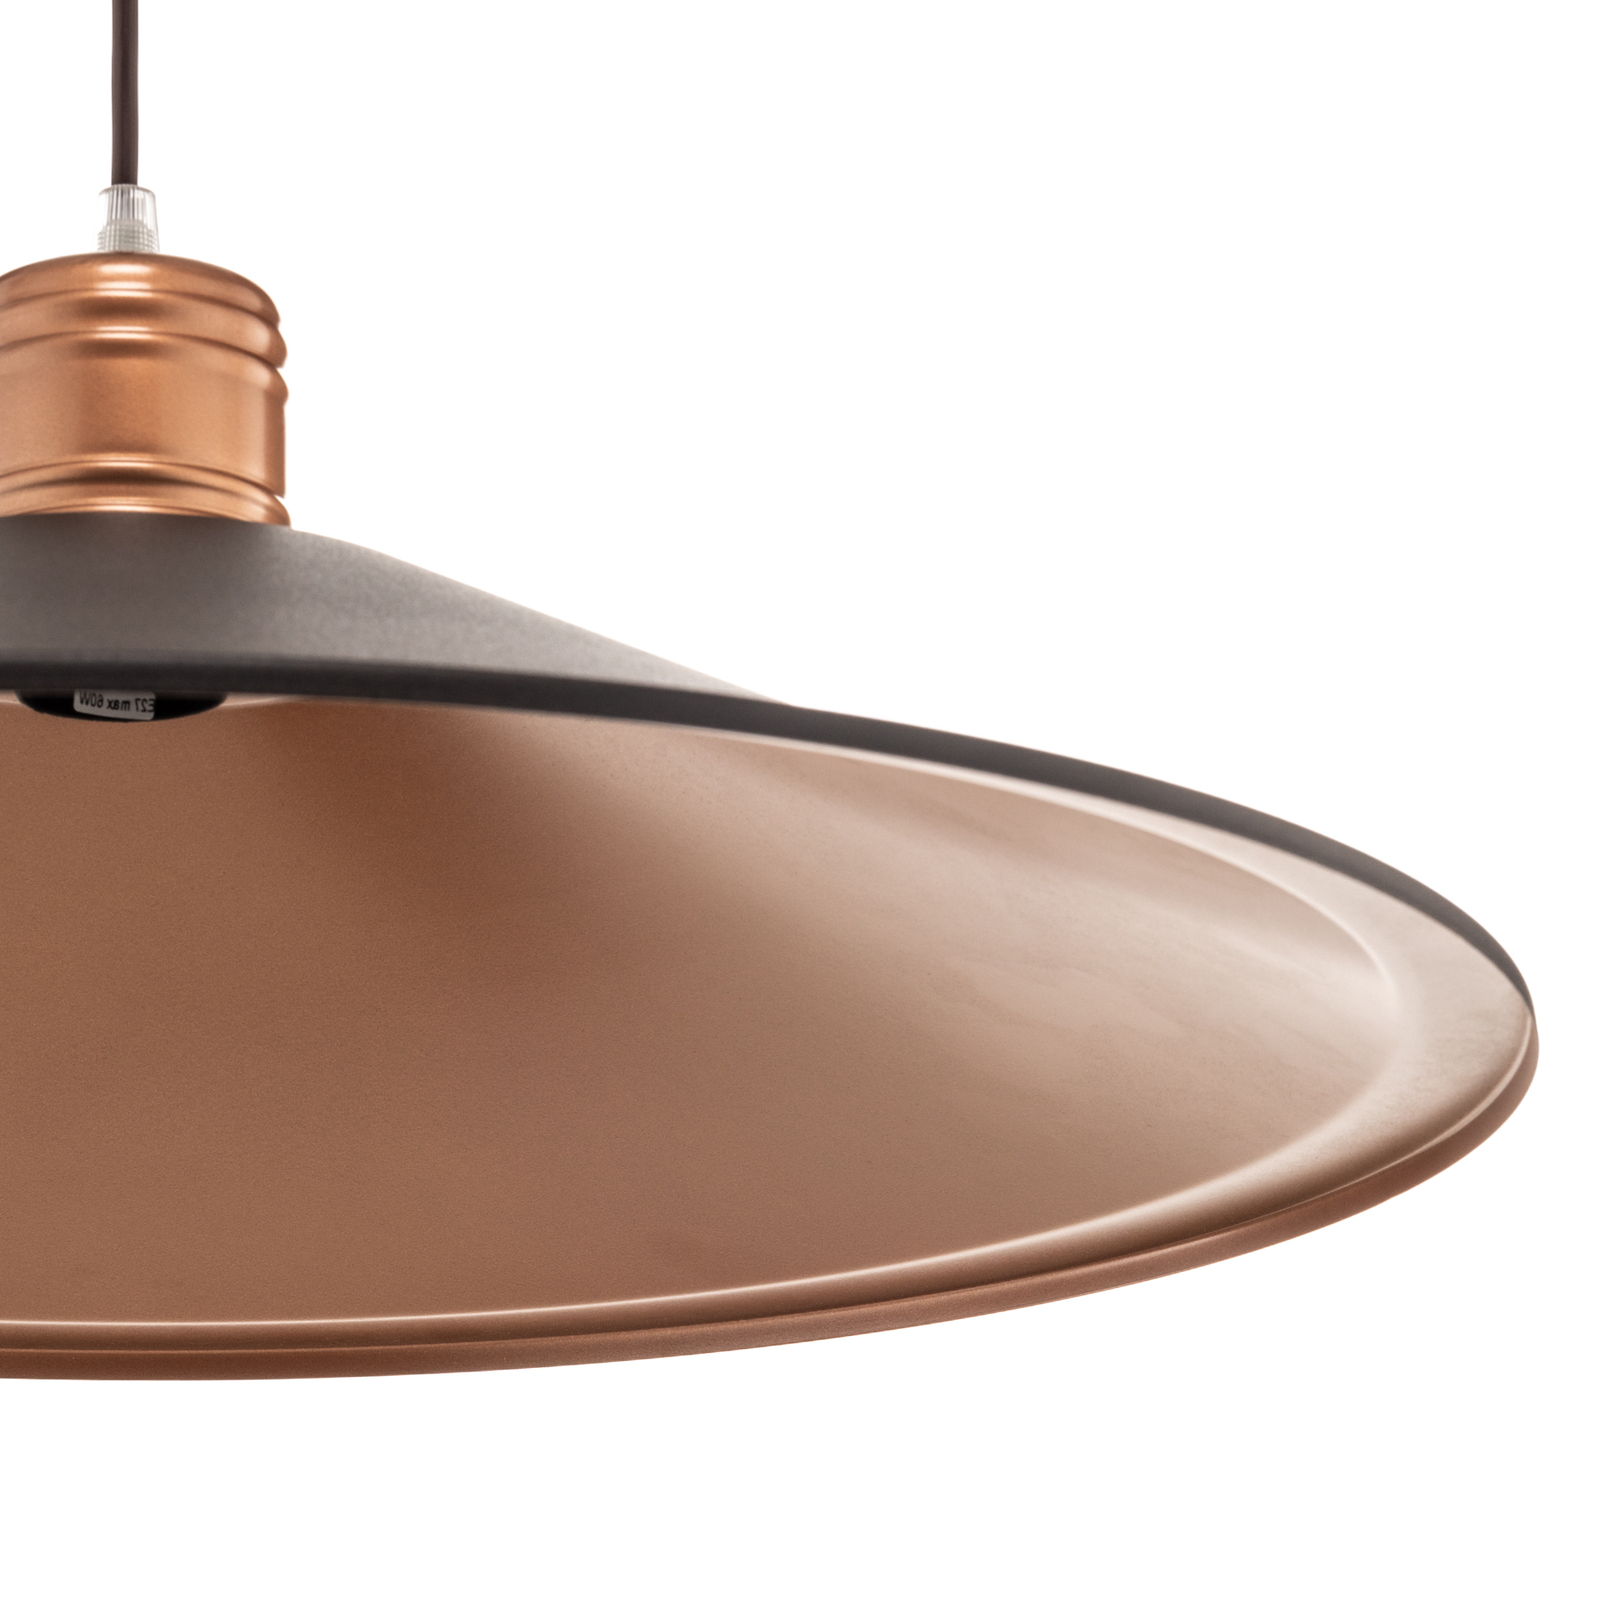 Garret I pendant light in dark brown/copper Ø 50cm